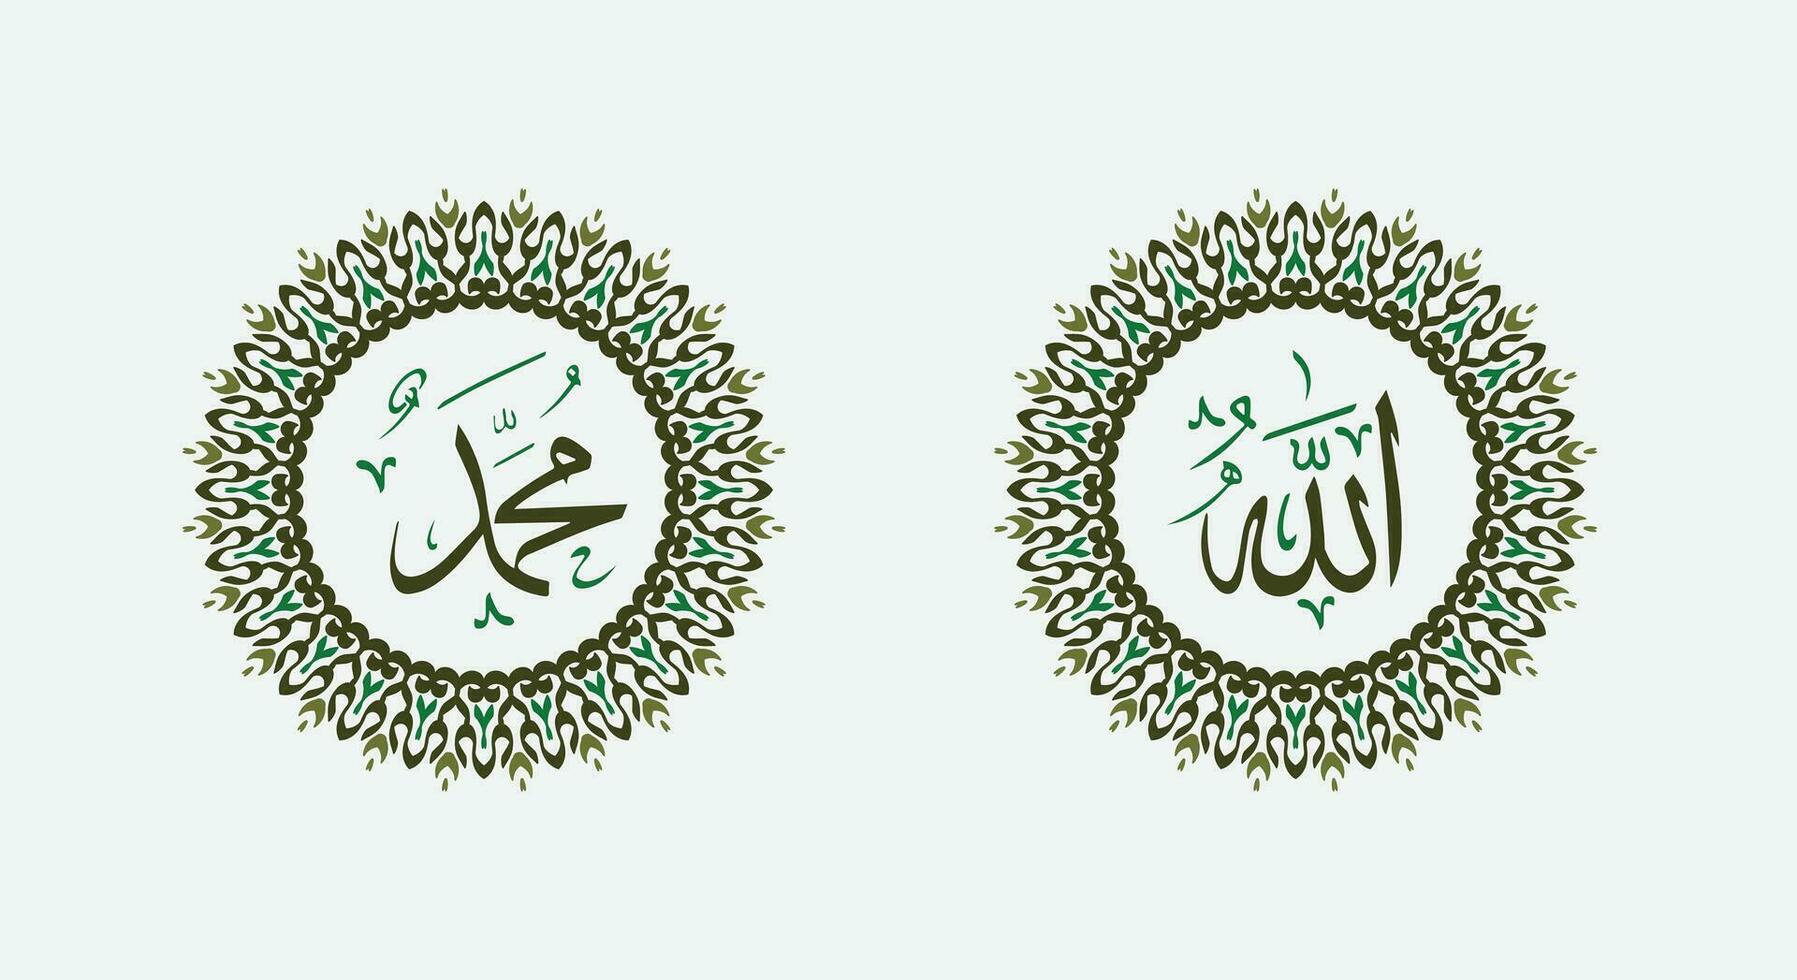 Allah Mohammed Nom de Allah mahomet, Allah Mohammed arabe islamique calligraphie art, avec traditionnel Cadre et vert Couleur vecteur